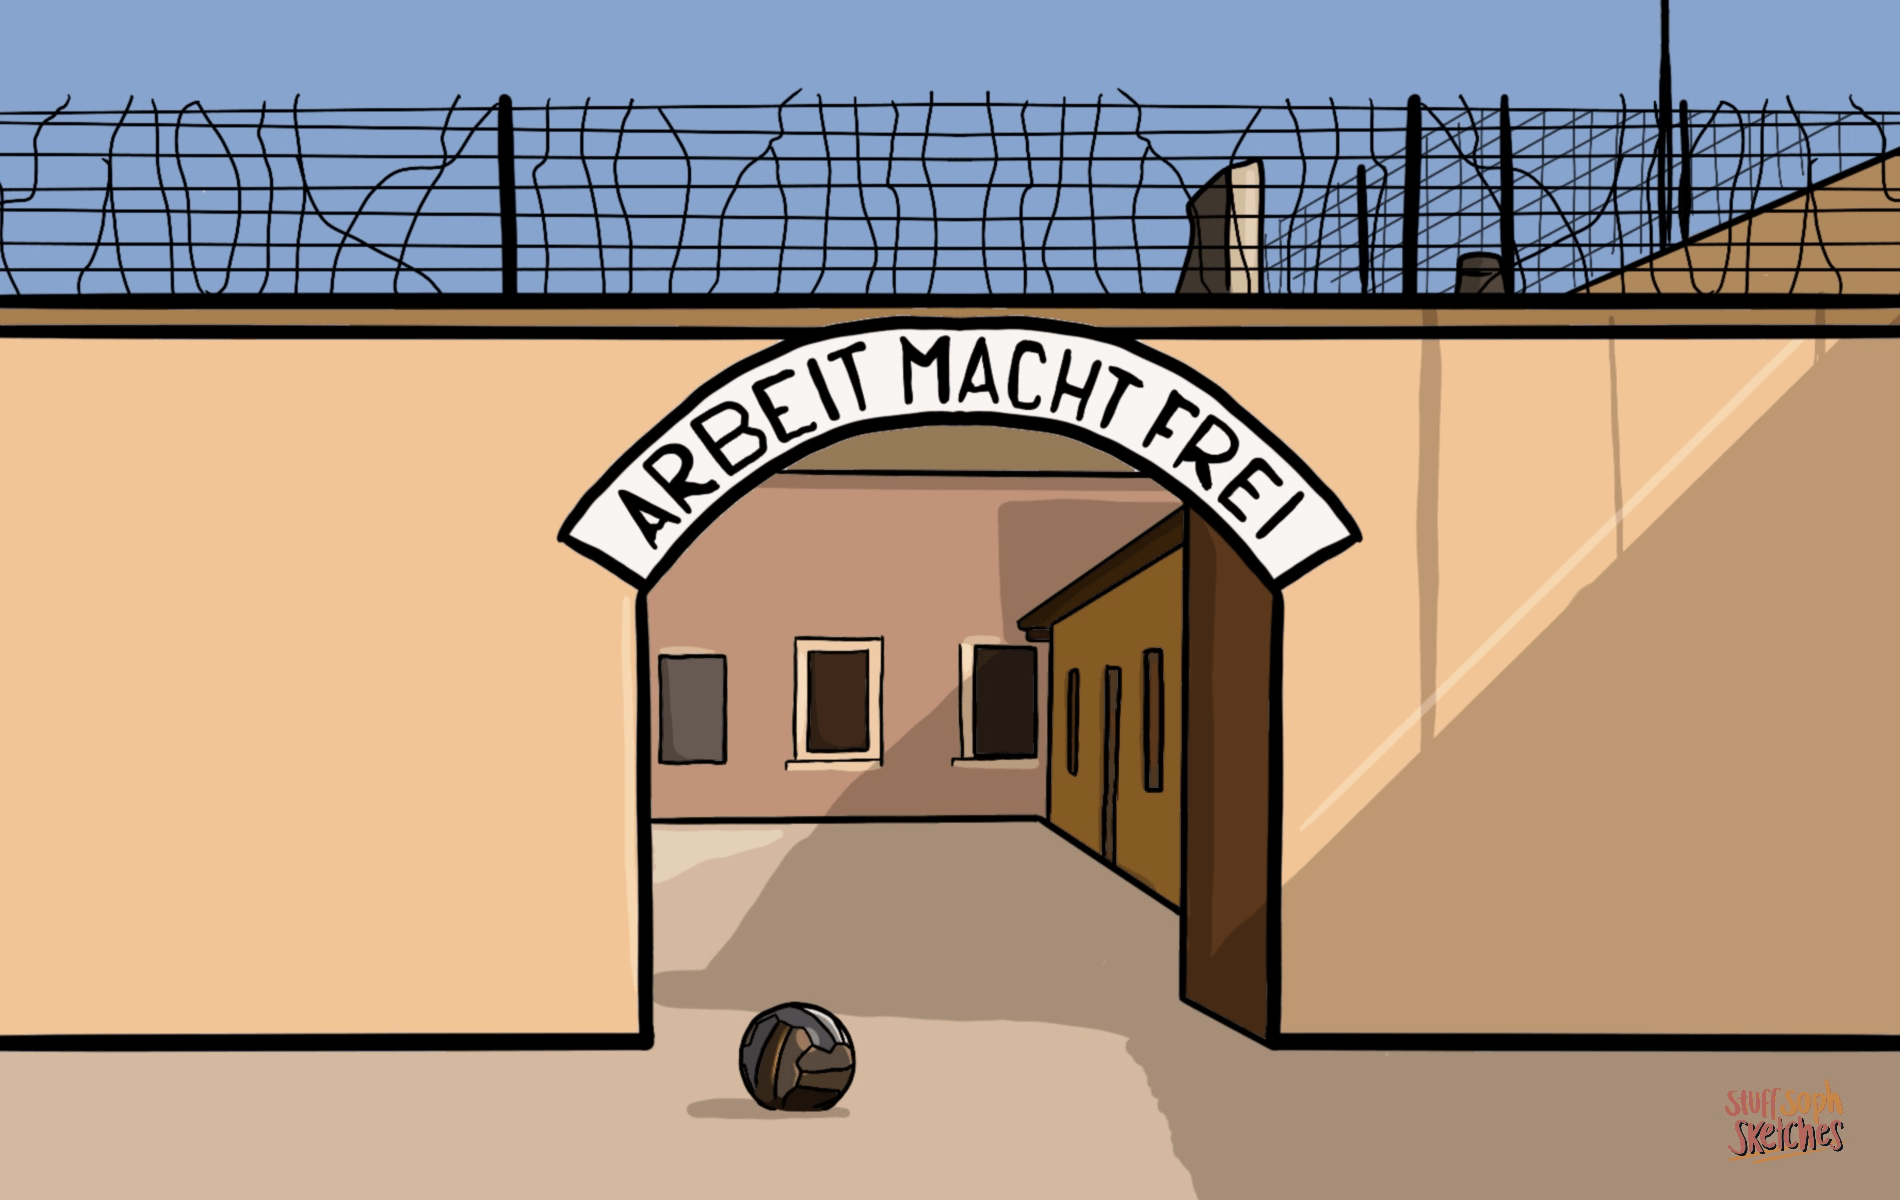 A football outside a prison camp